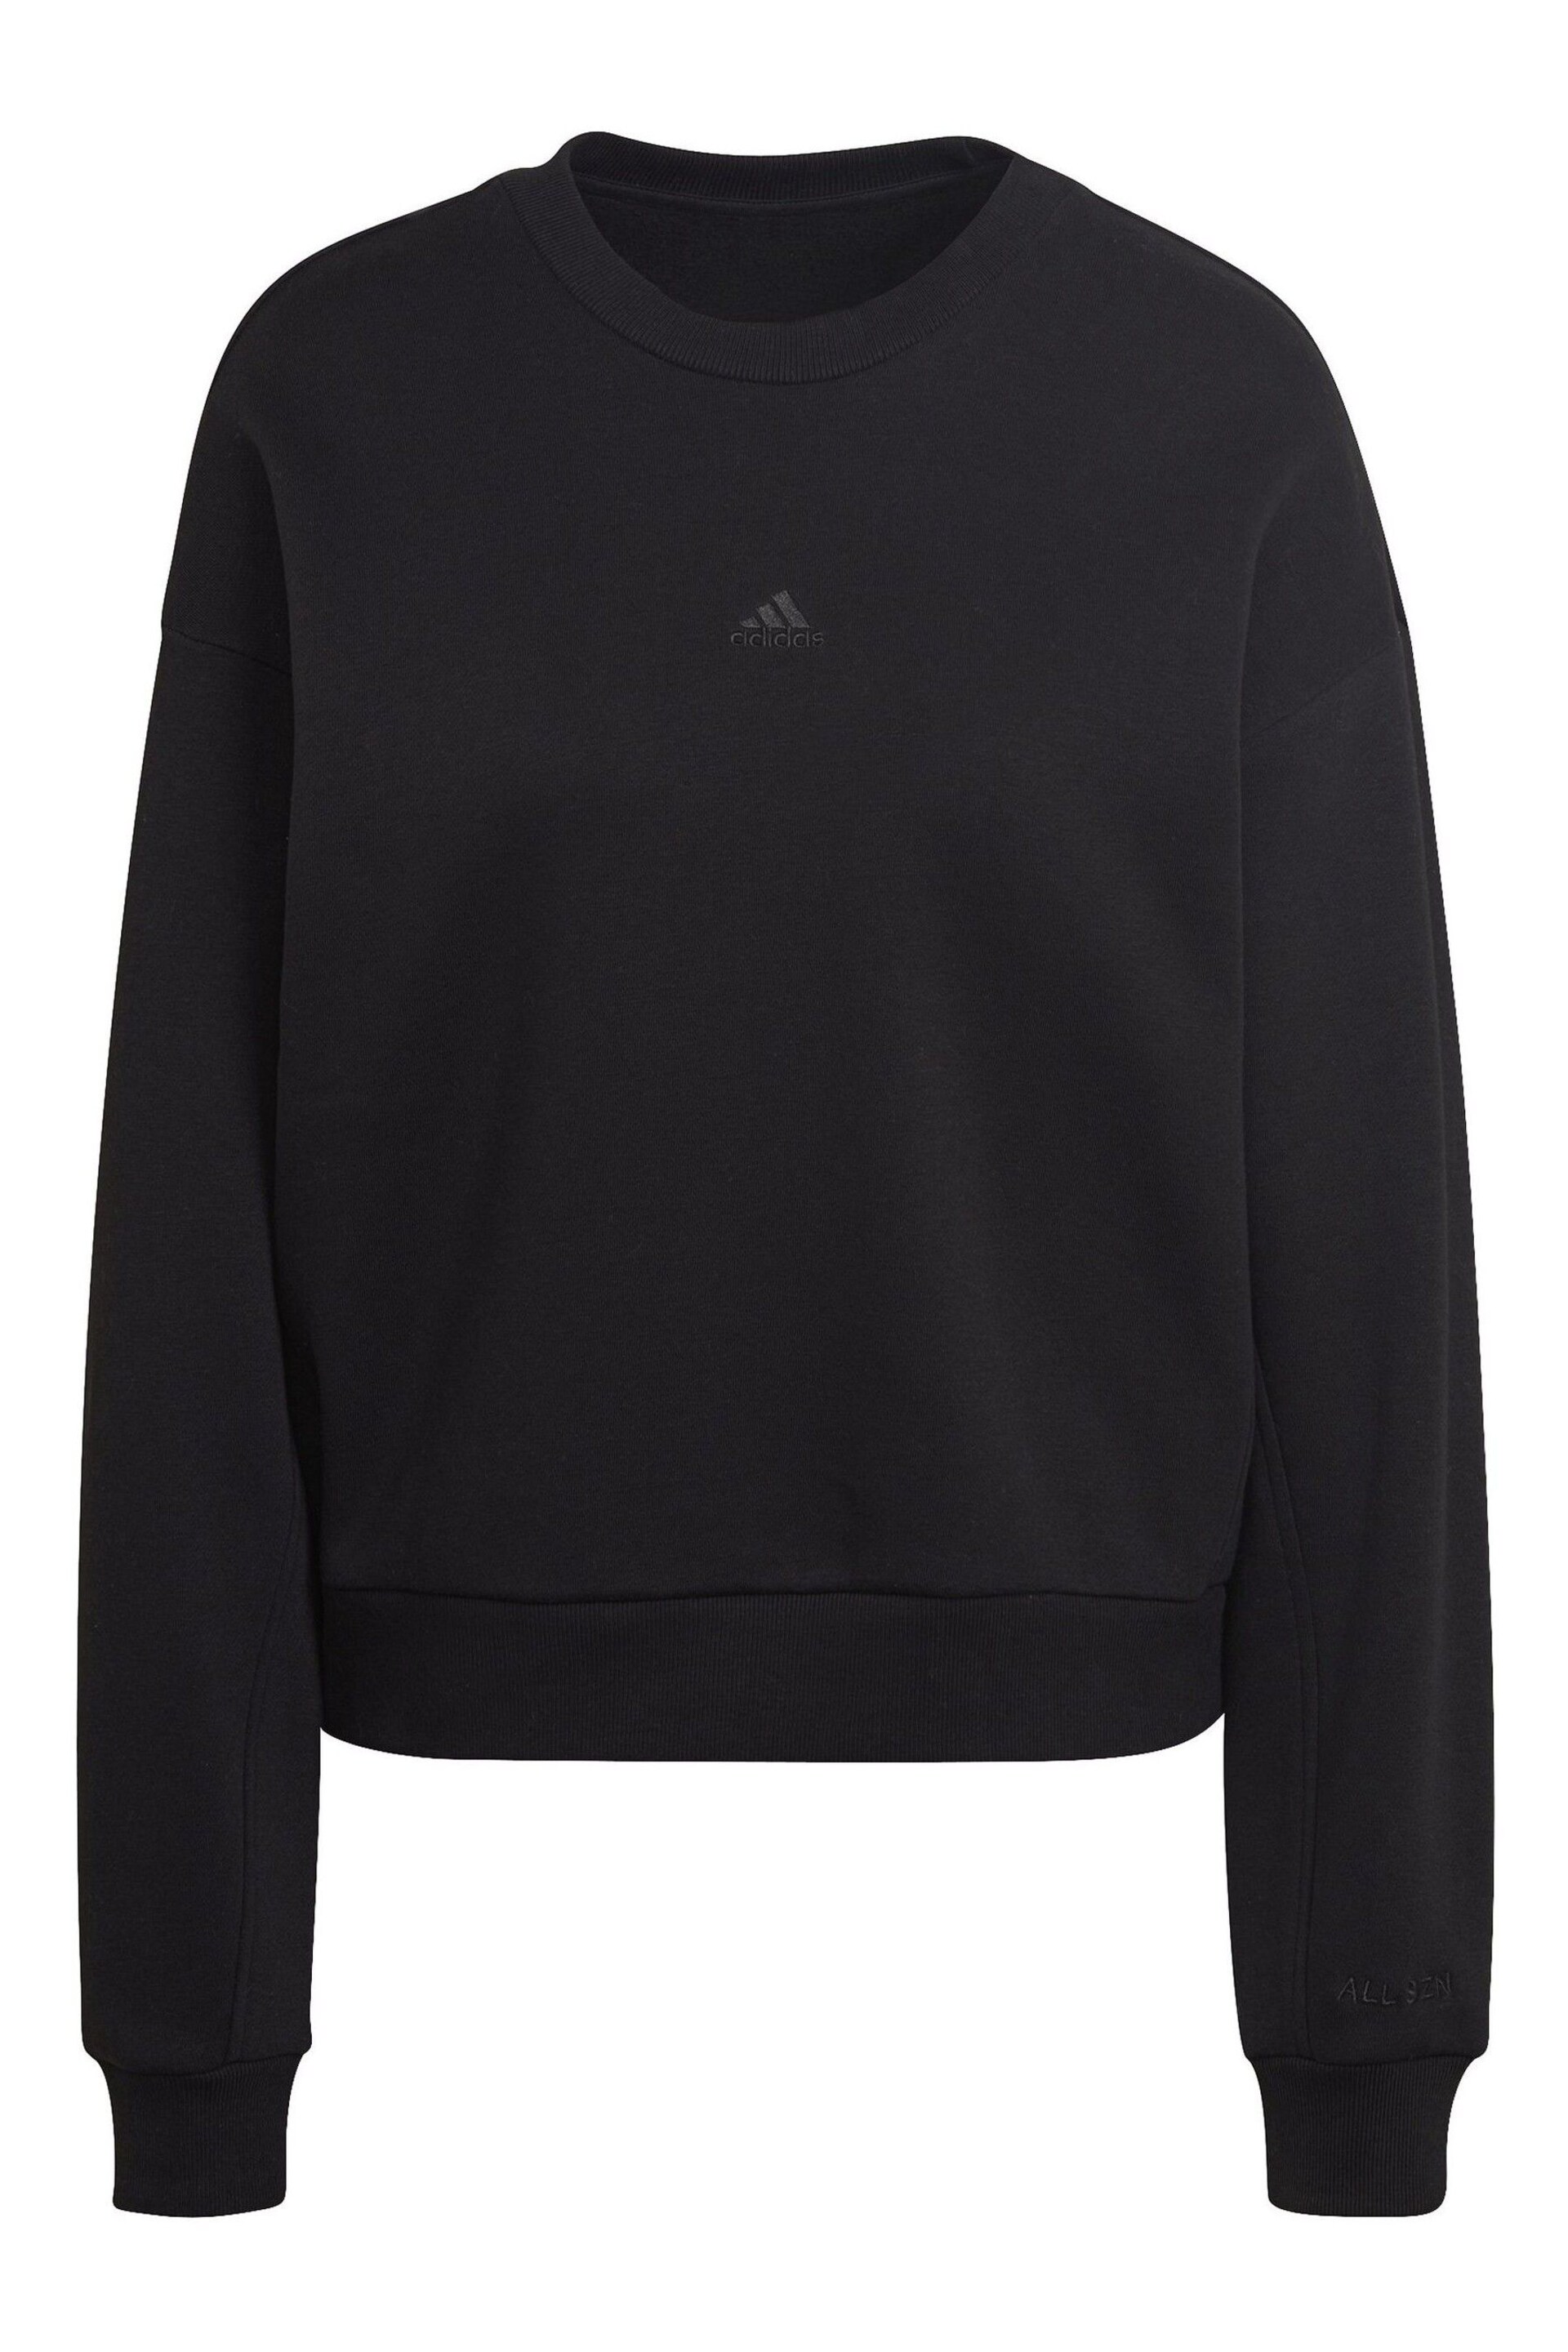 adidas Black Sportswear All Szn Fleece Sweatshirt - Image 7 of 7